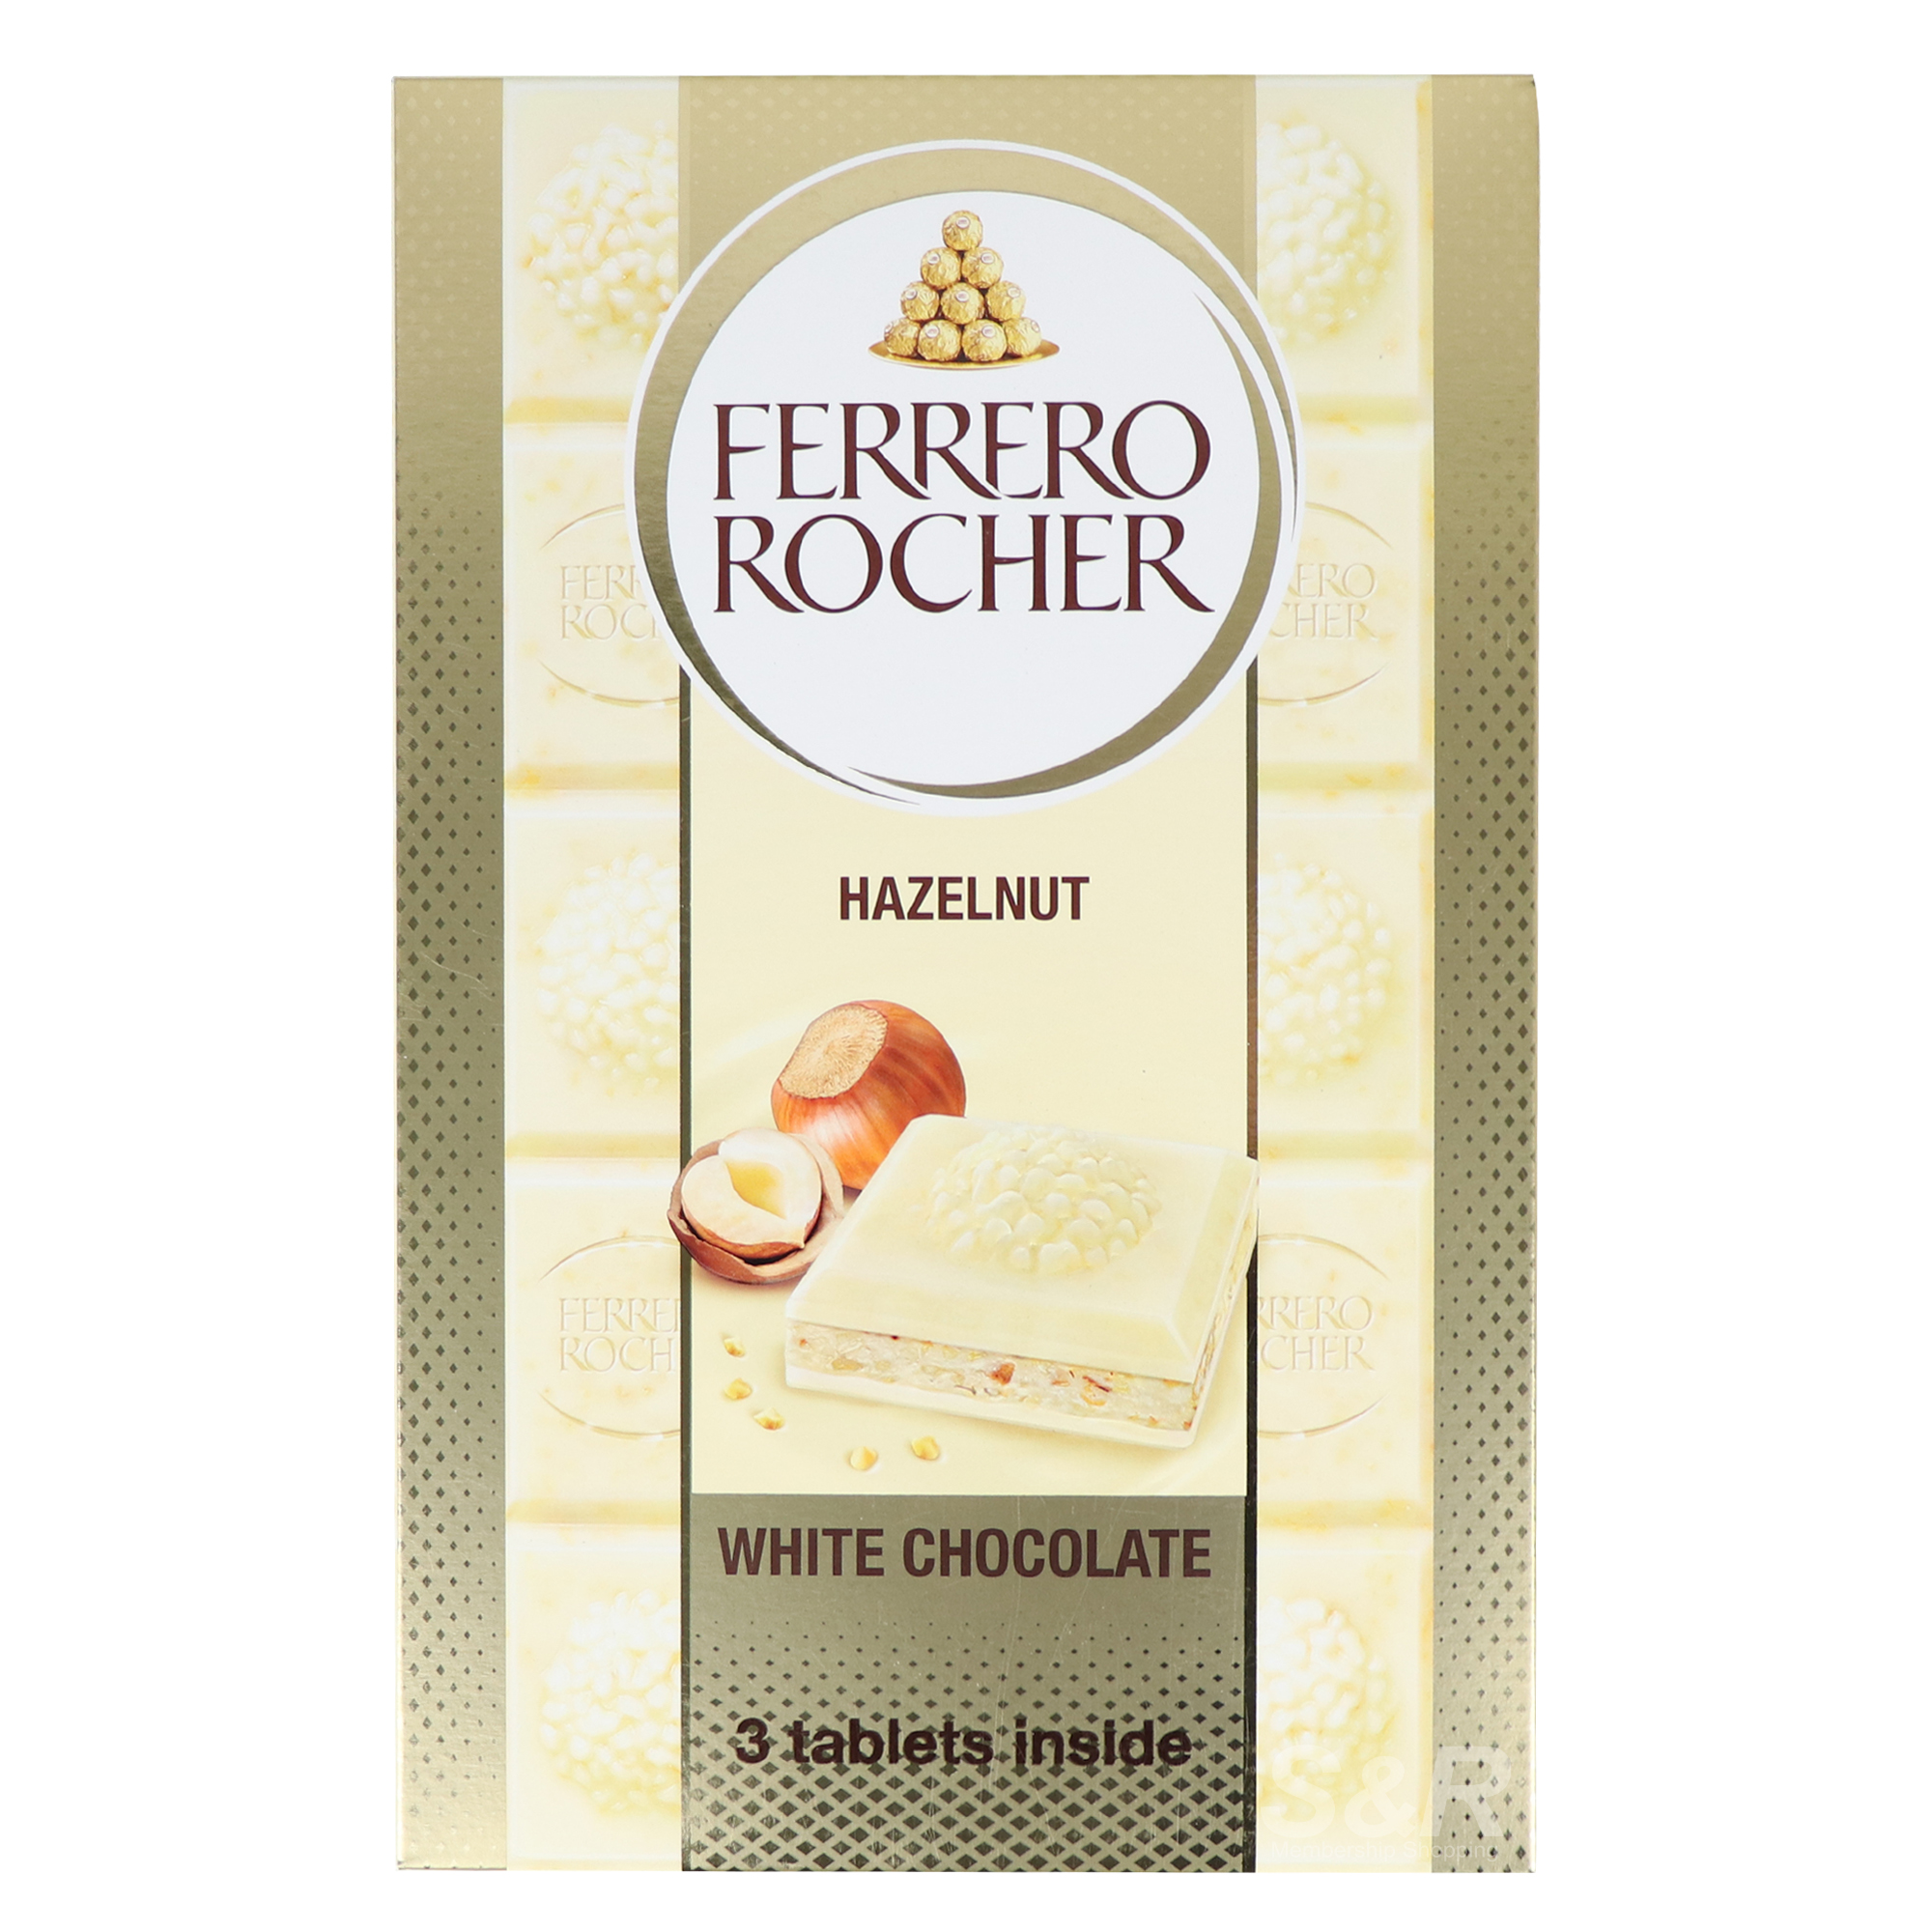 Ferrero Rocher Hazelnut White Chocolate 3x90g